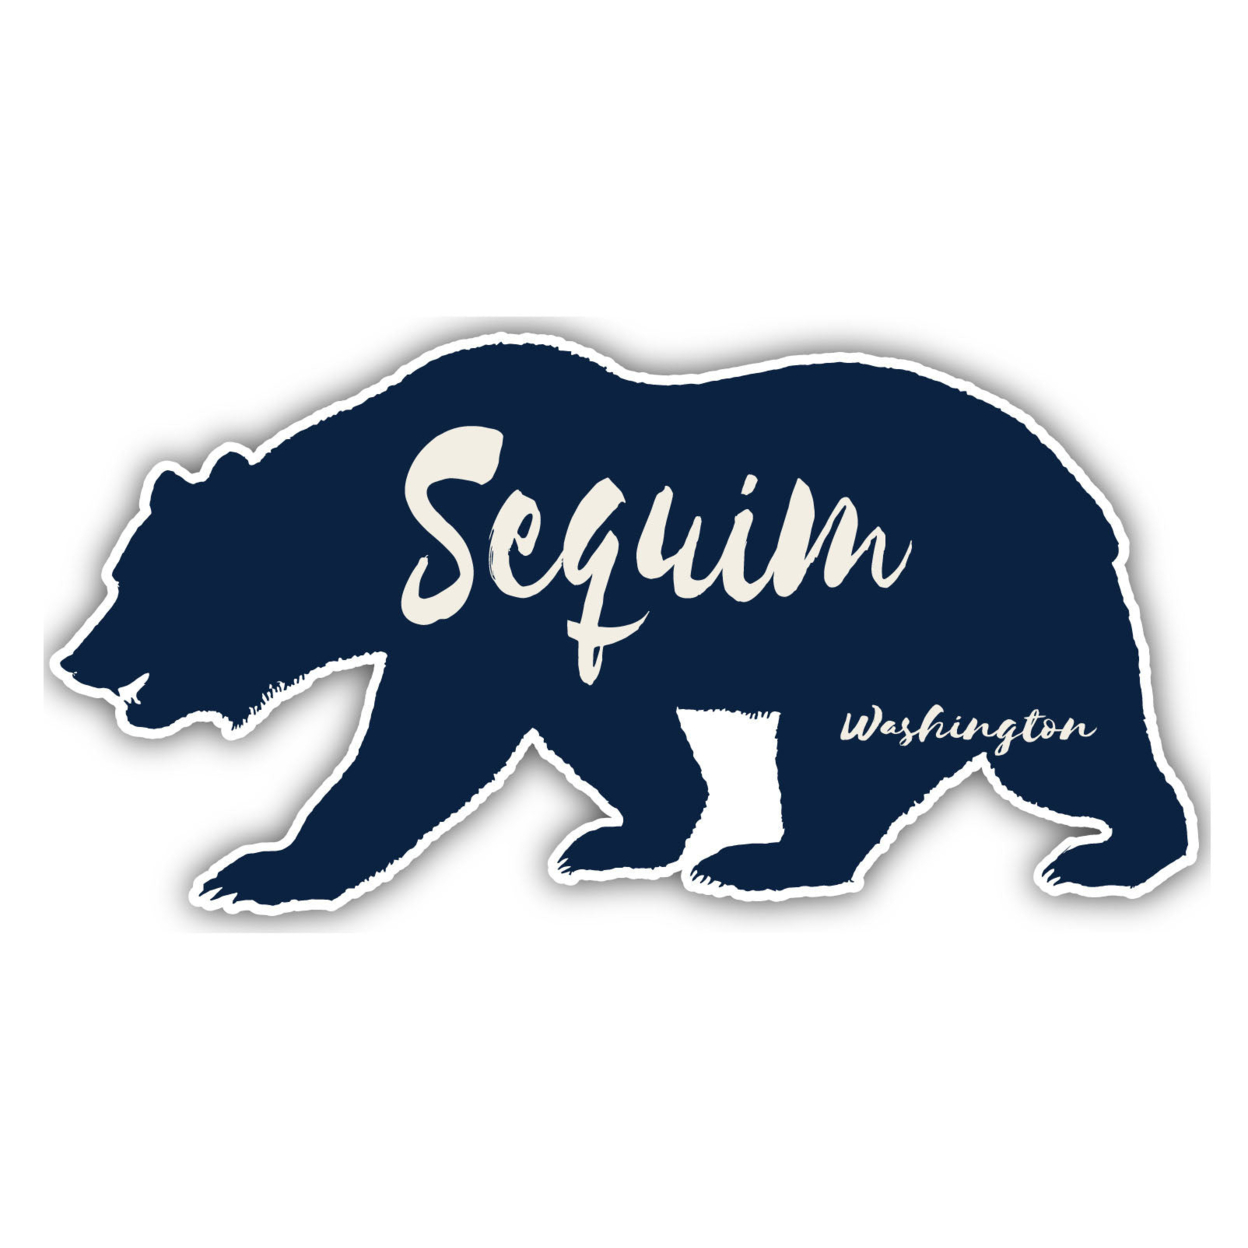 Sequim Washington Souvenir Decorative Stickers (Choose Theme And Size) - Single Unit, 2-Inch, Bear